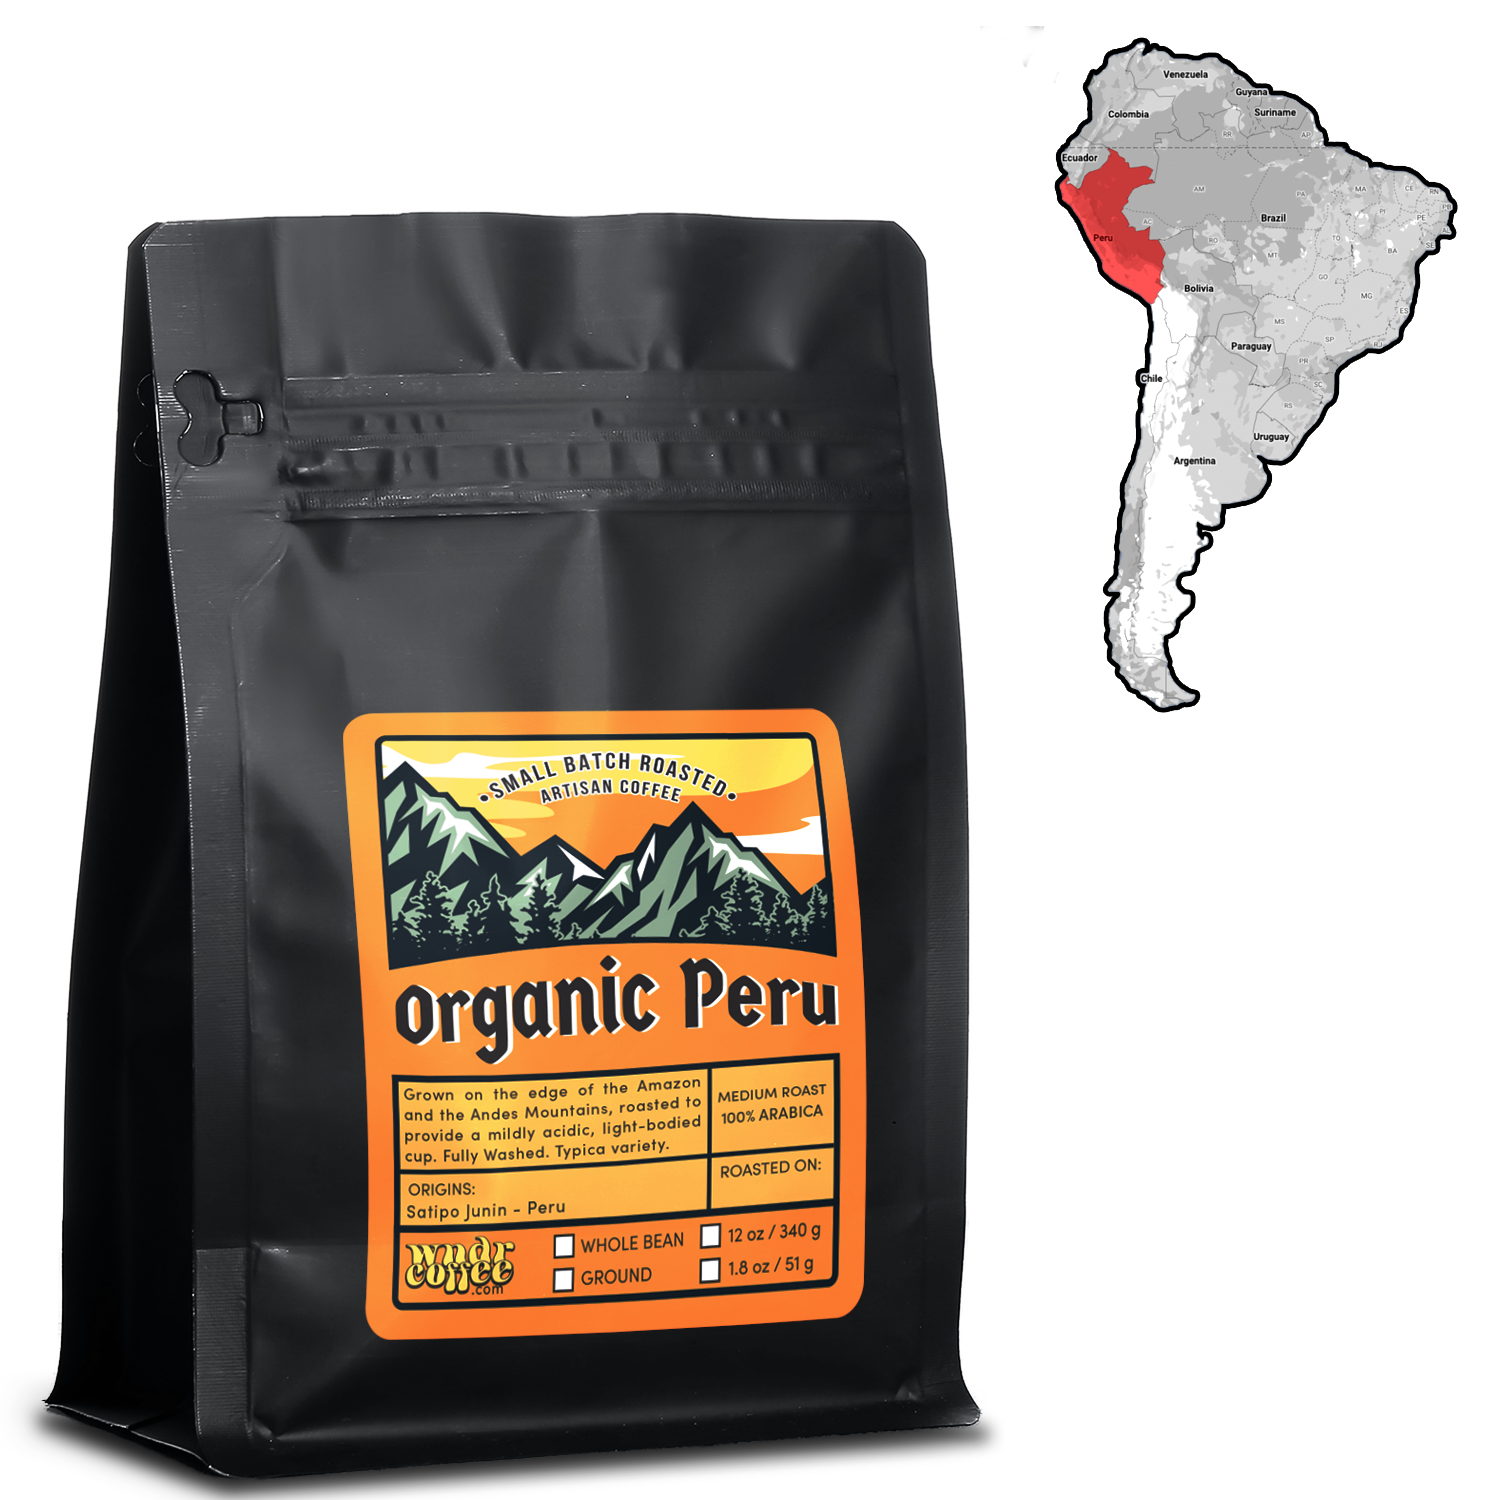 Map showing Peru location in South America next to a 12 oz bag of organic peru coffee